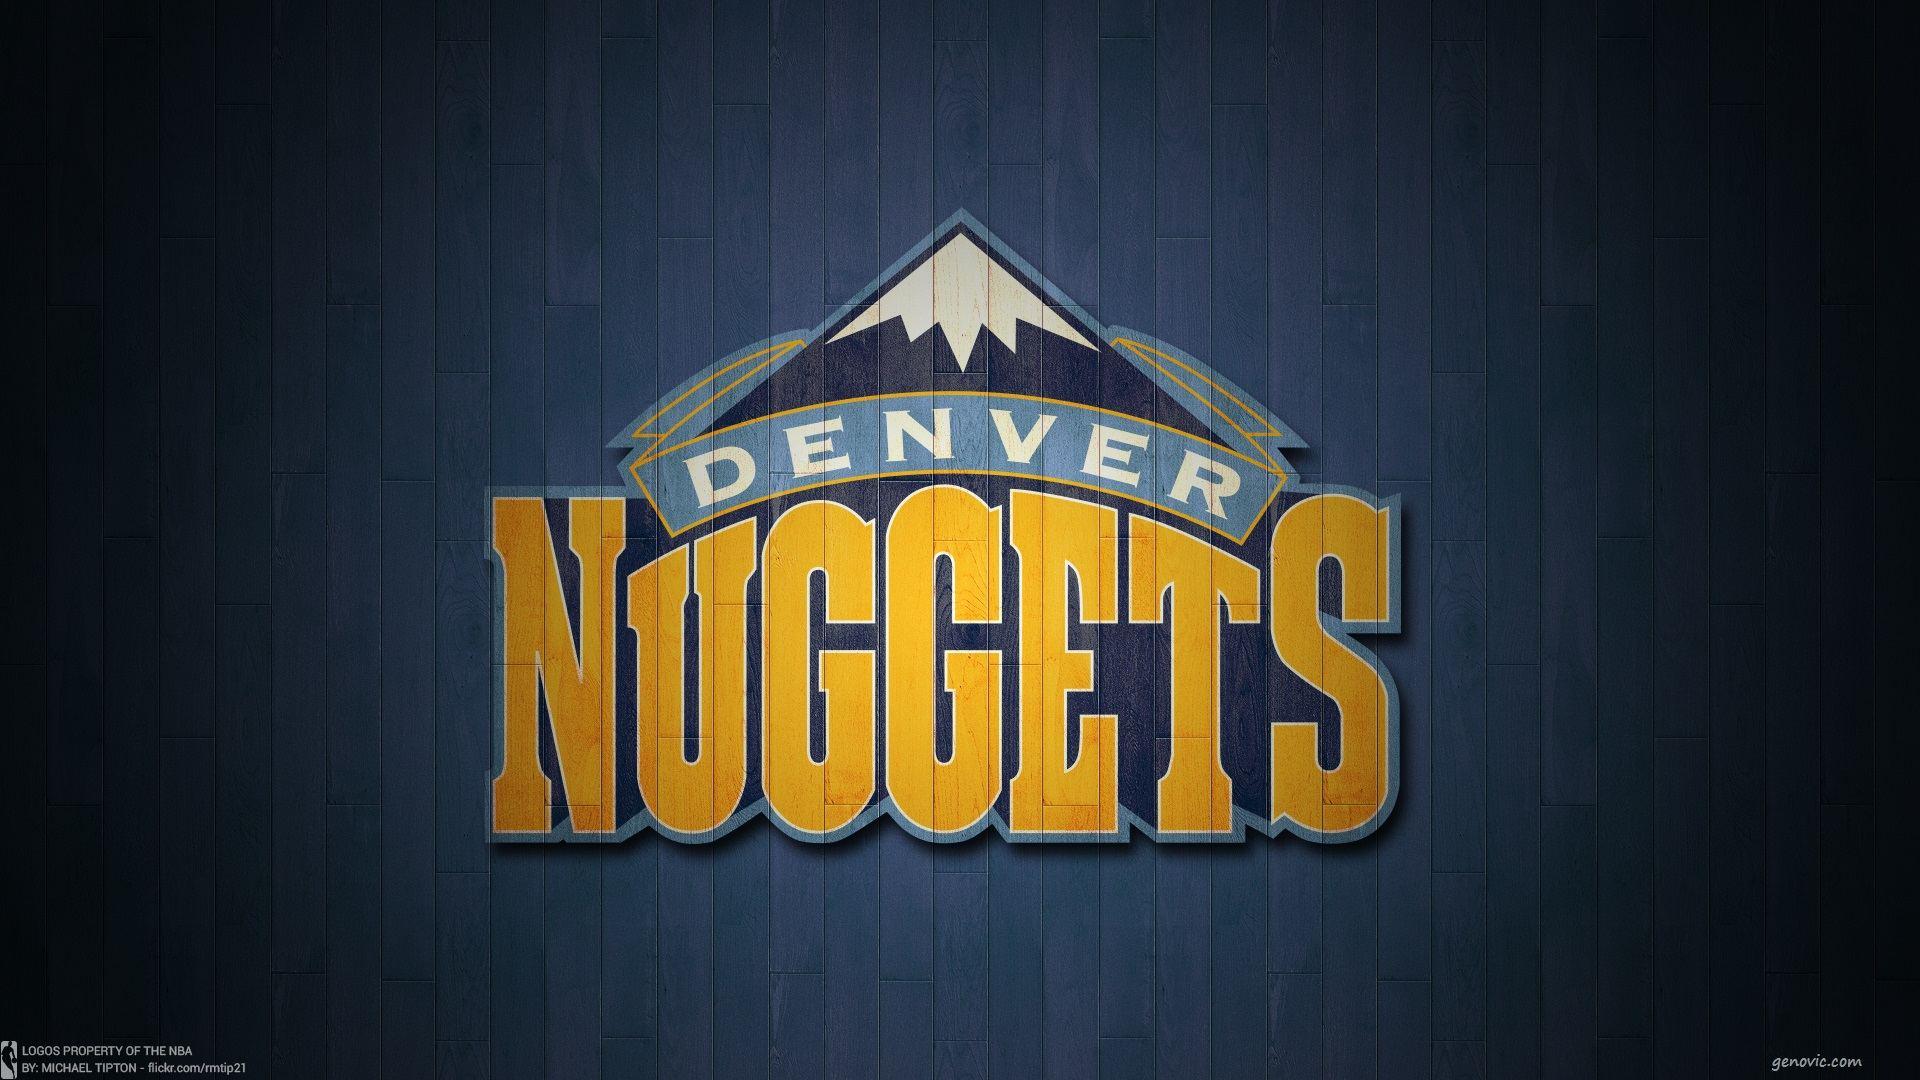 Denver Nuggets wallpaper HD free download